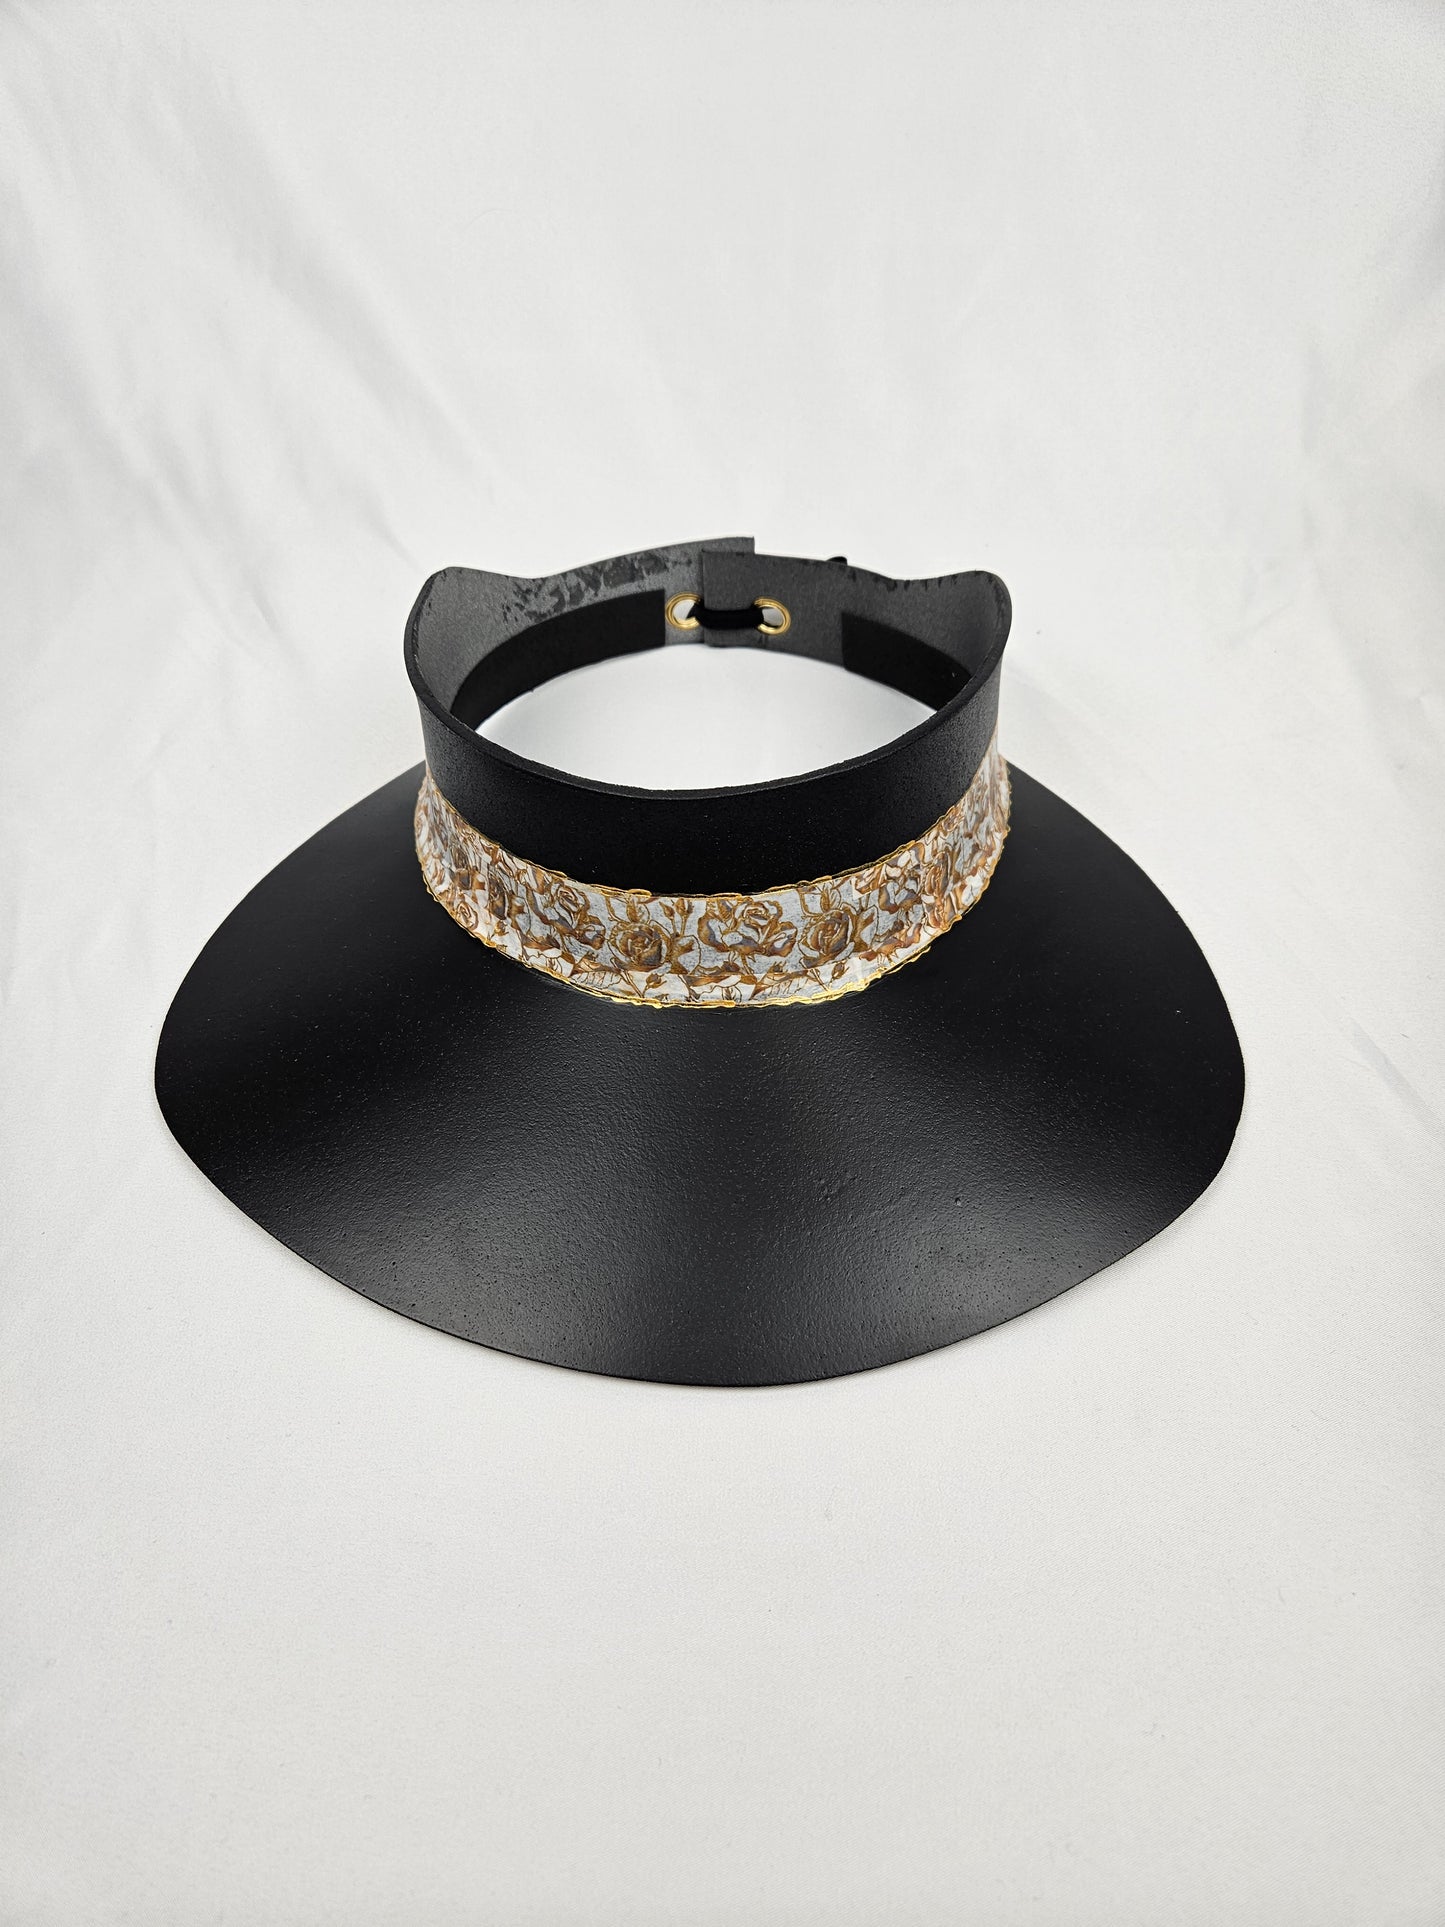 Timeless Black Audrey Foam Sun Visor Hat with Golden Floral Band: Big Brim, Swim, Pool, UV Resistant, No Headache